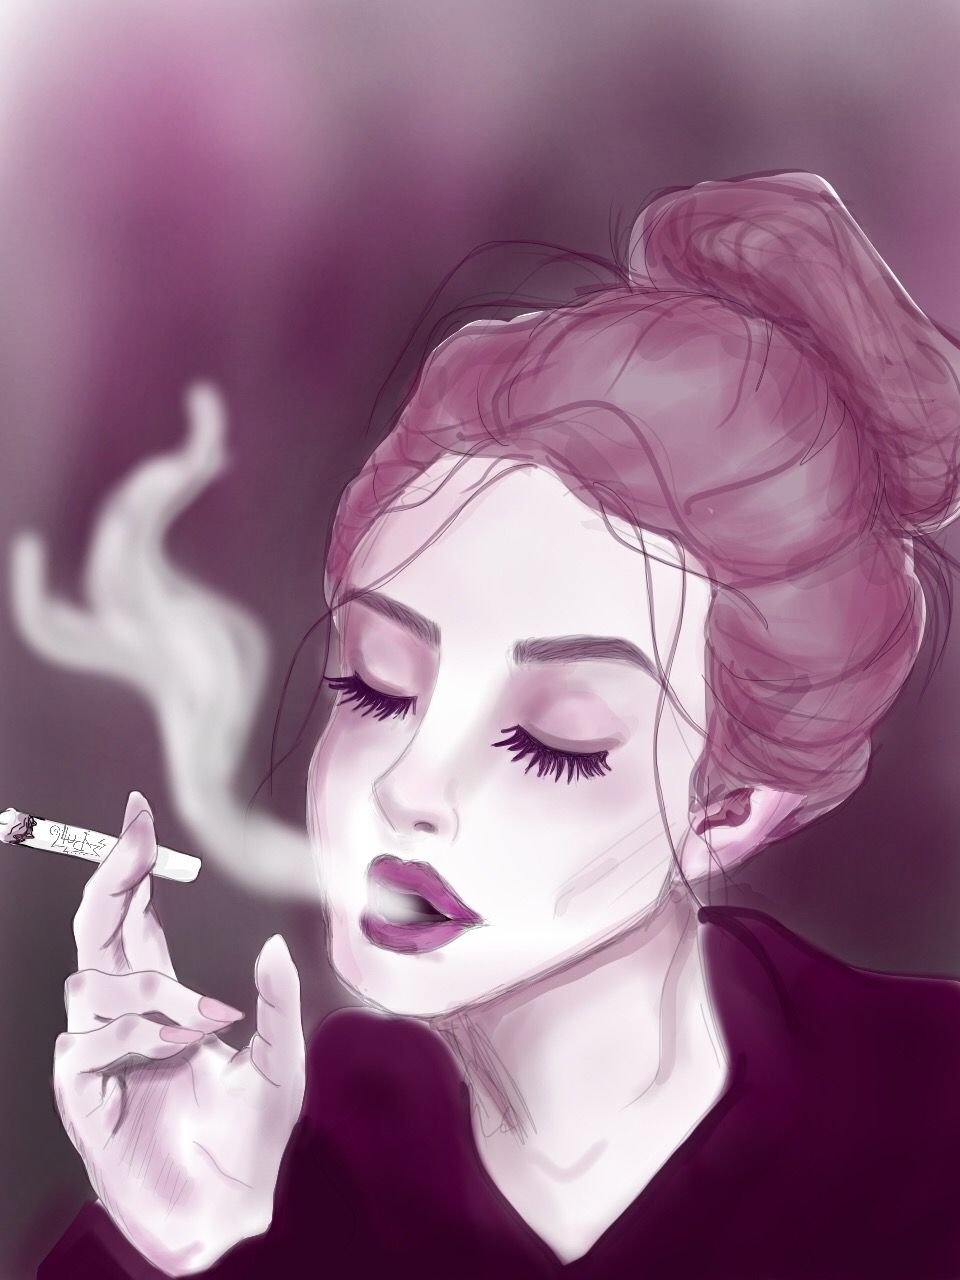 Курящая девушка арт